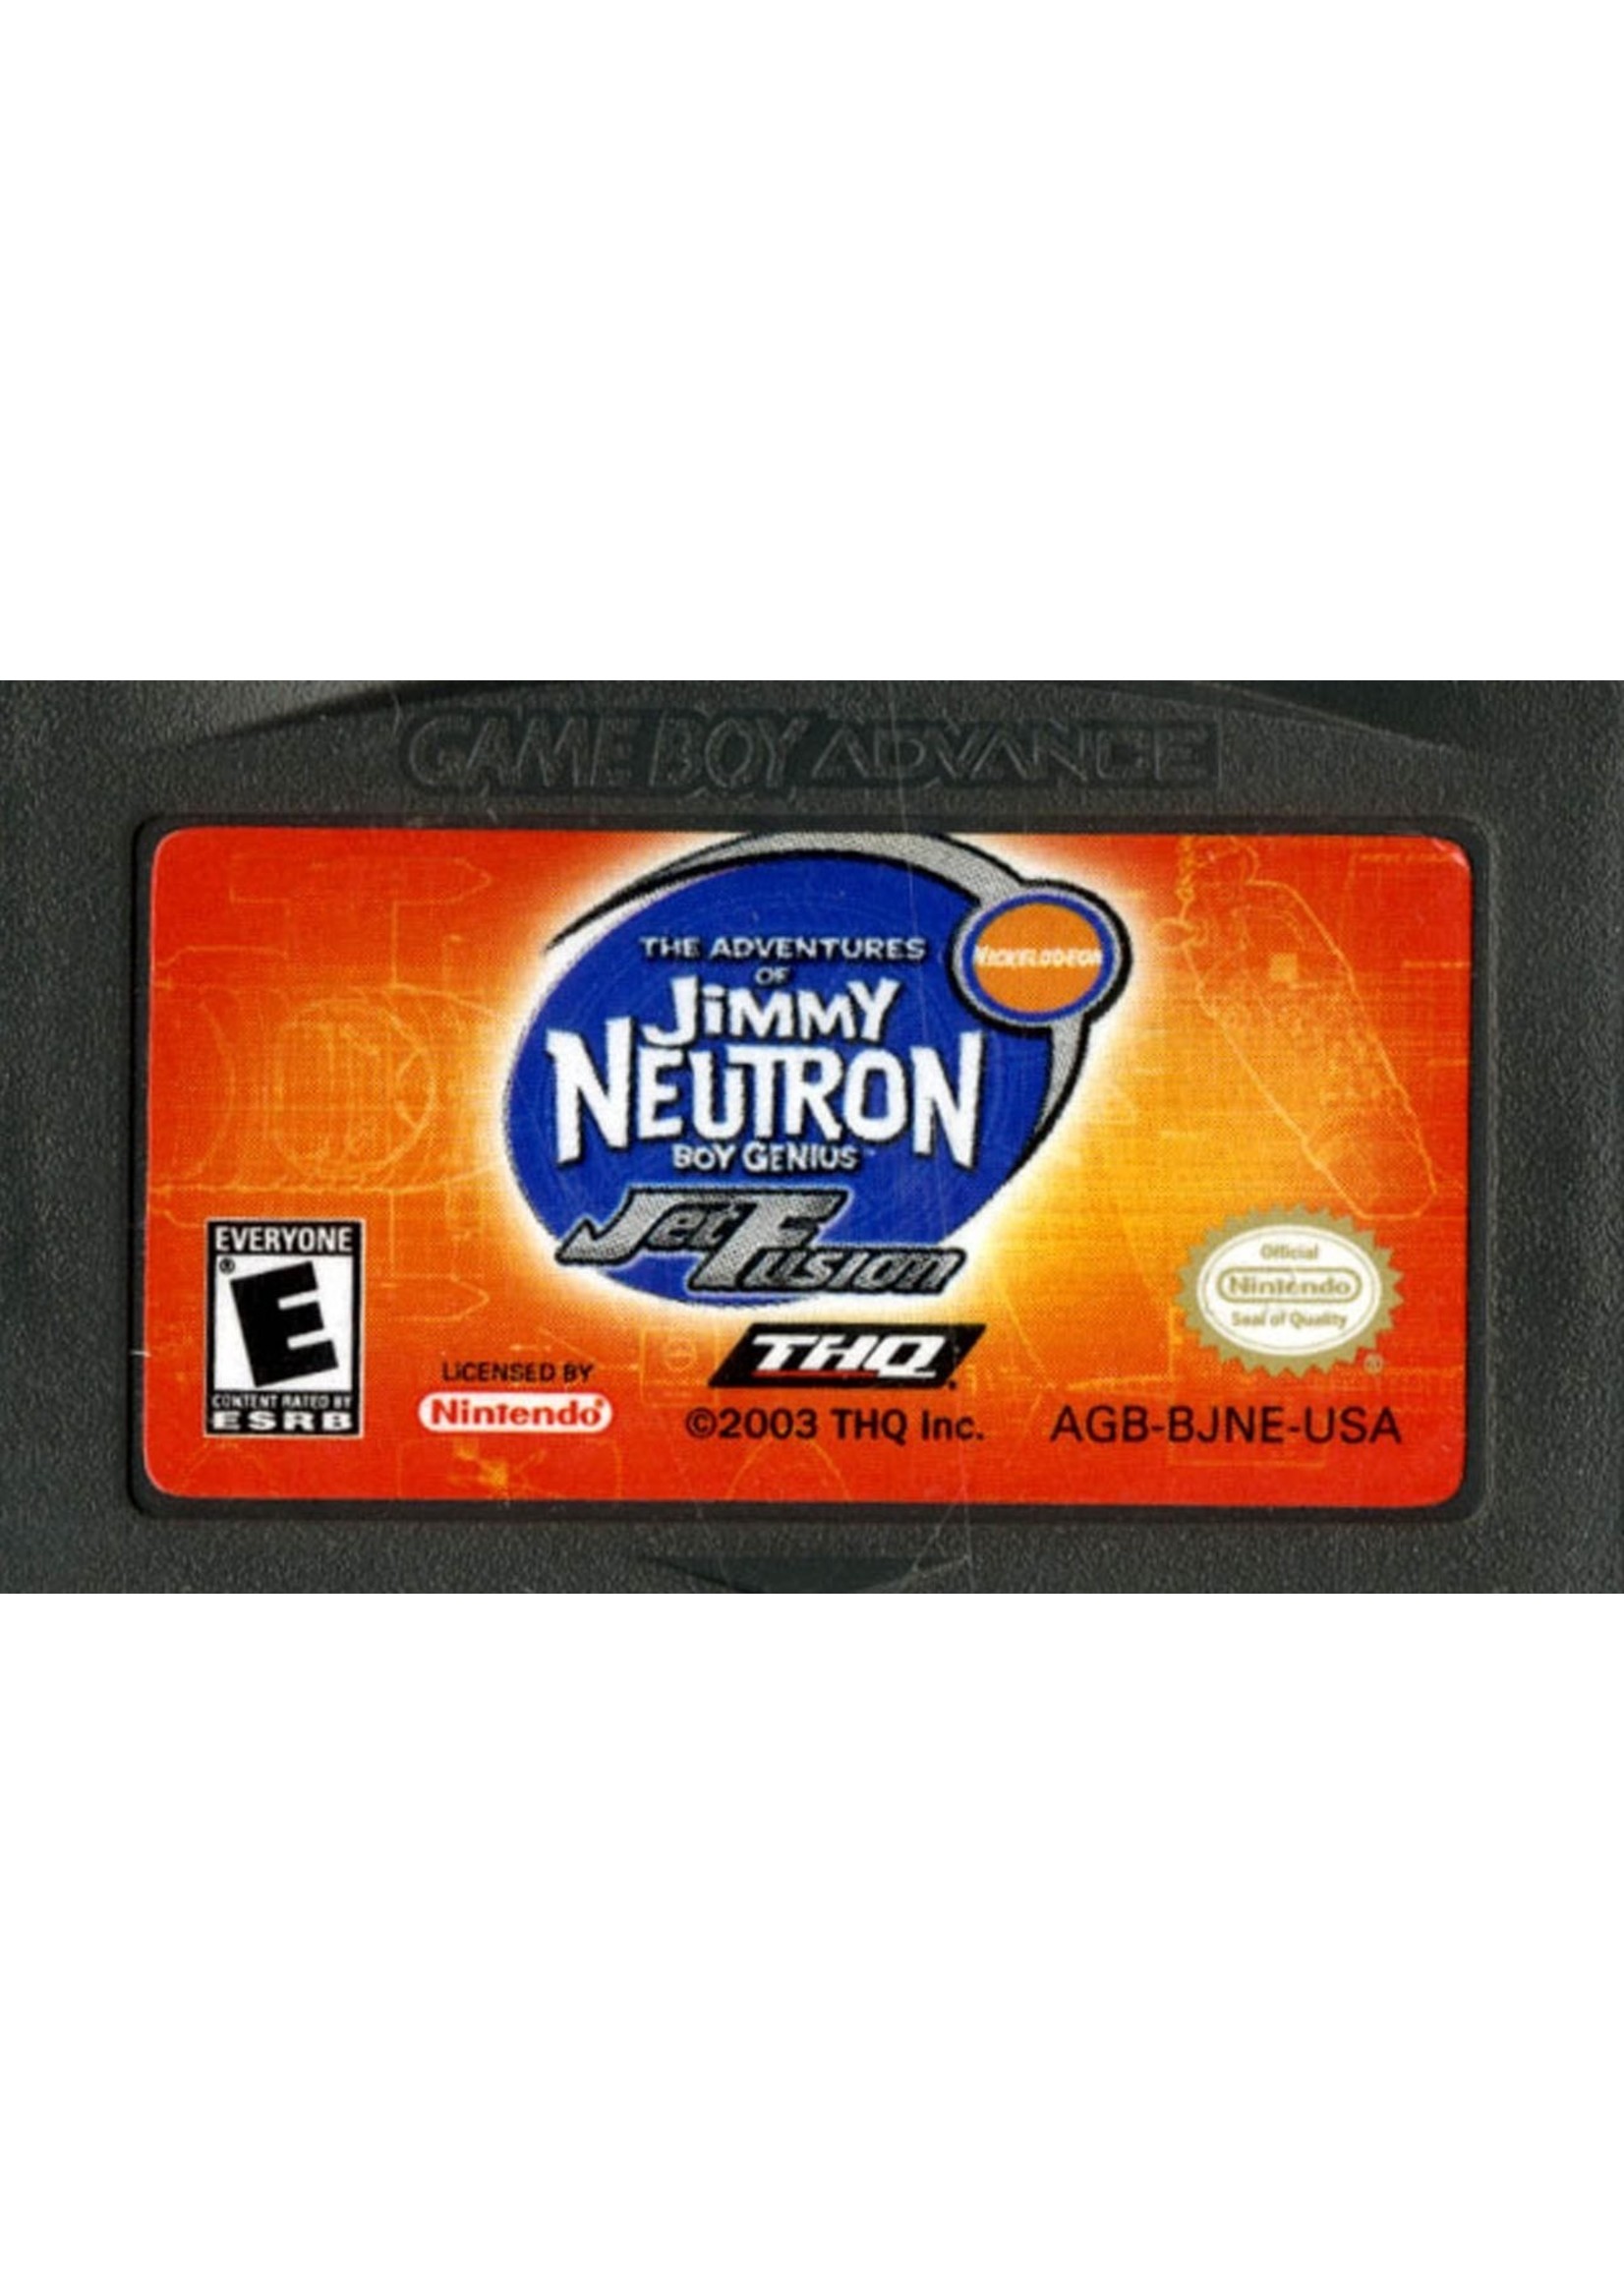 Nintendo Gameboy Advance Adventures of Jimmy Neutron Boy Genius: Jet Fusion